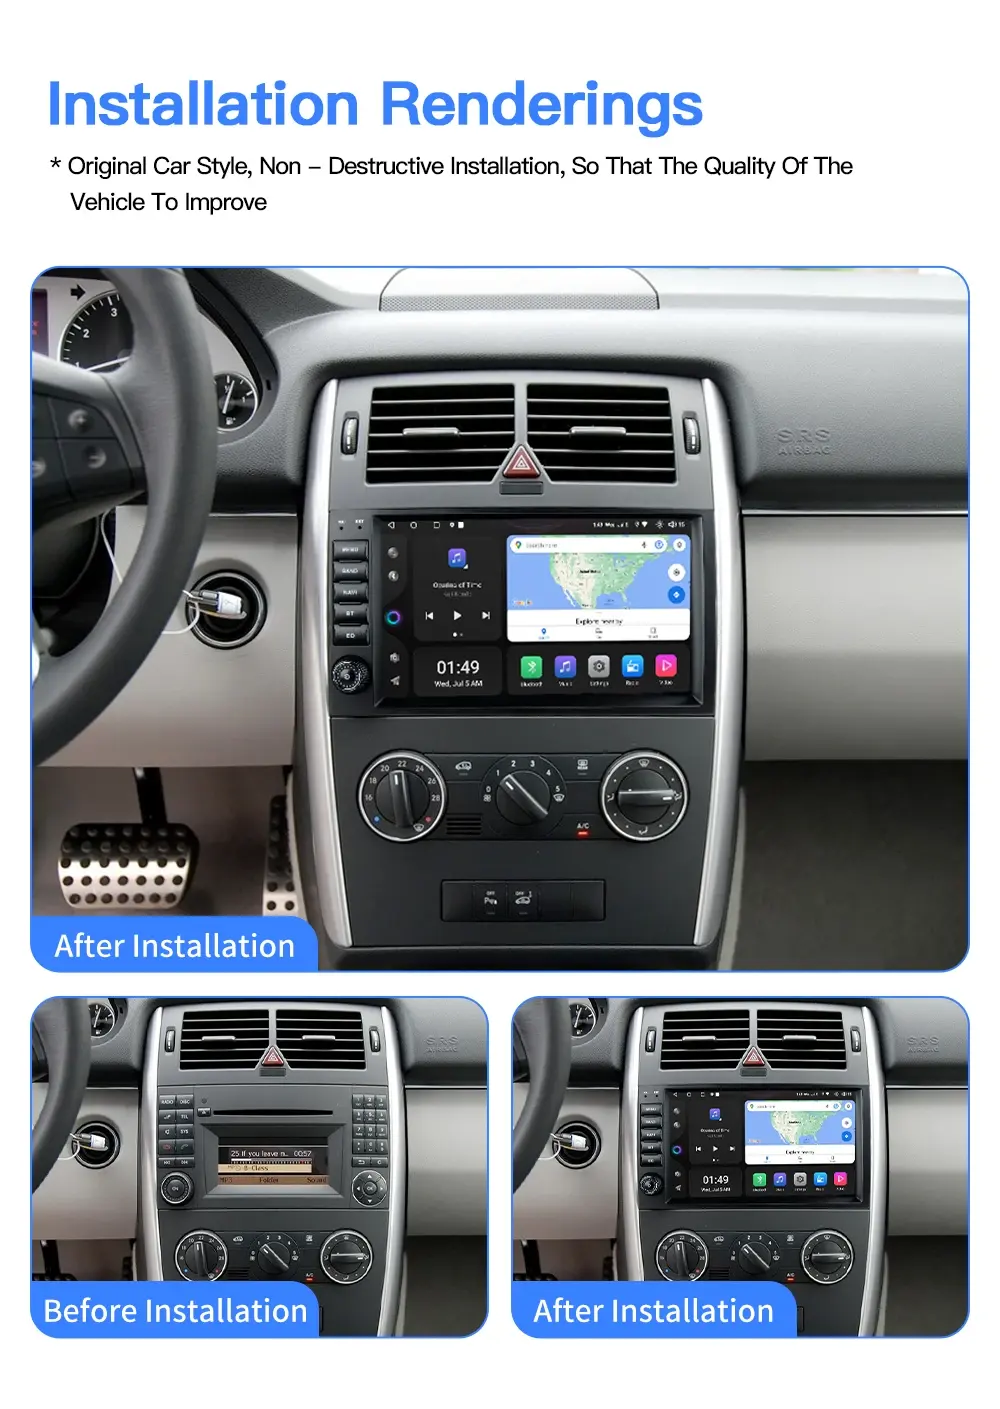 BQCC DAB CarPlay radyo Stereo ayna 7 inç radyo 1 + 32GB/2 + 32GB/2 + 64GB GPS Wifi RDS Mercedes Bens B200 2008-2017 için